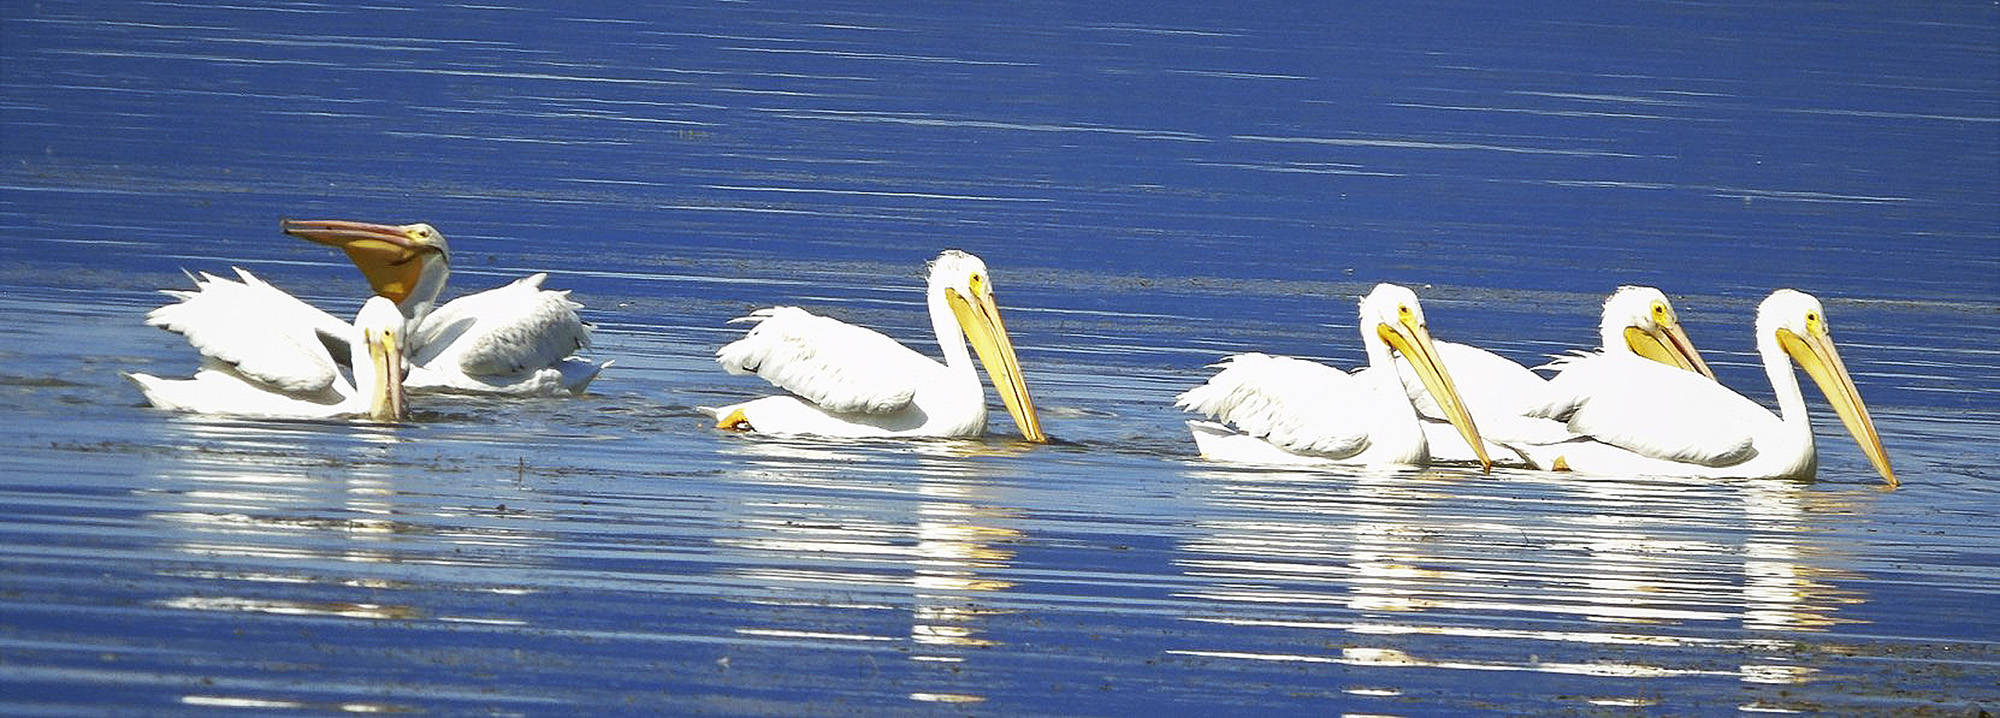 18351485_web1_190906-SAA-White-Pelicans